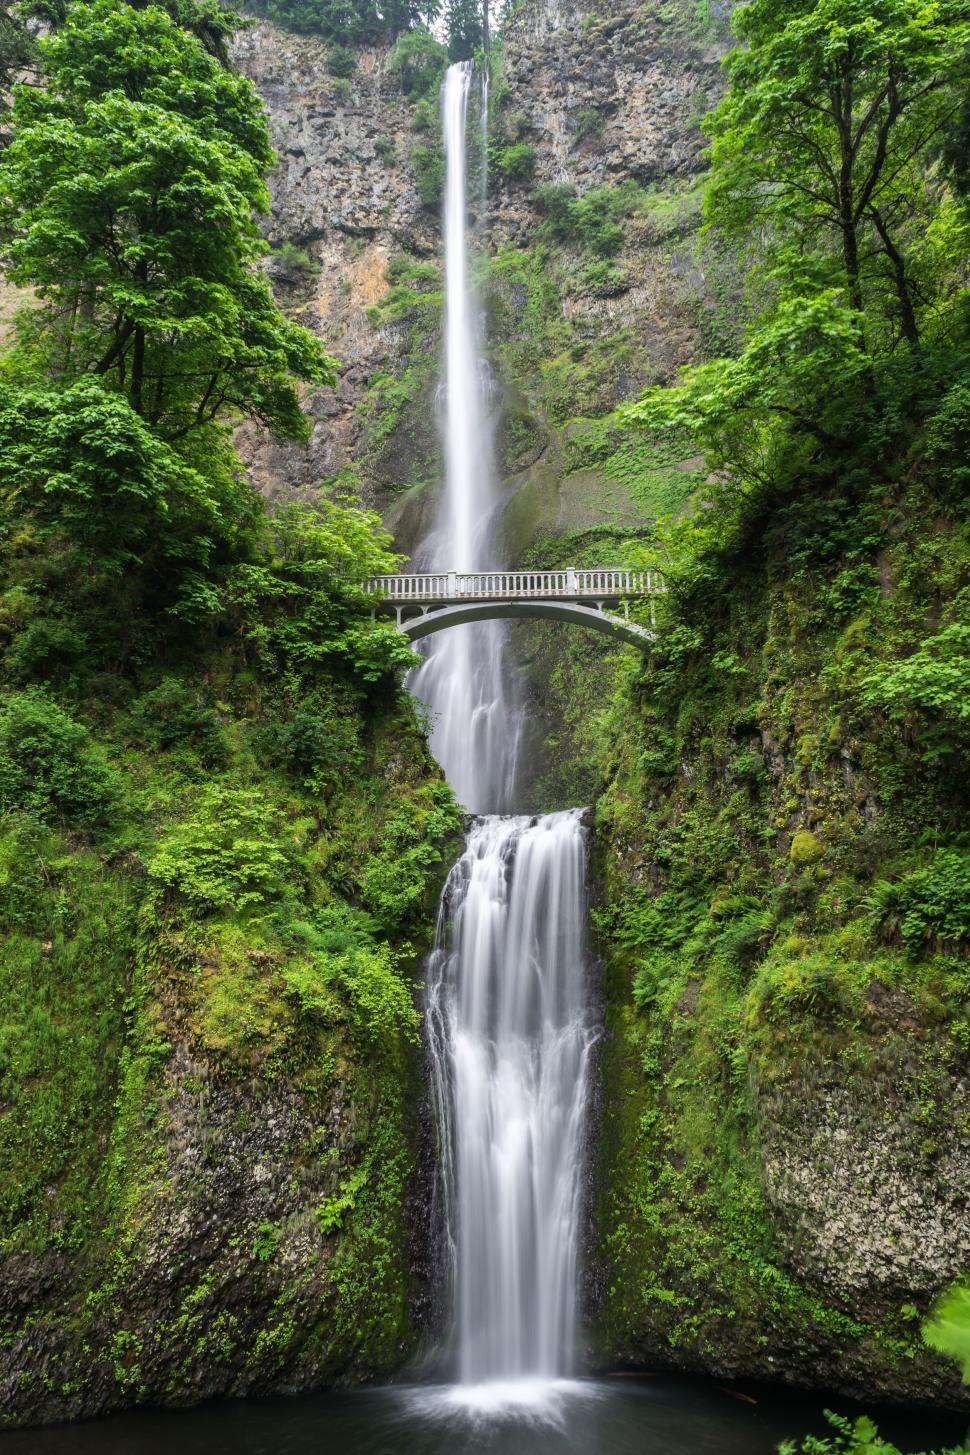 Free Image of Majestic Waterfall With Bridge Crossing 